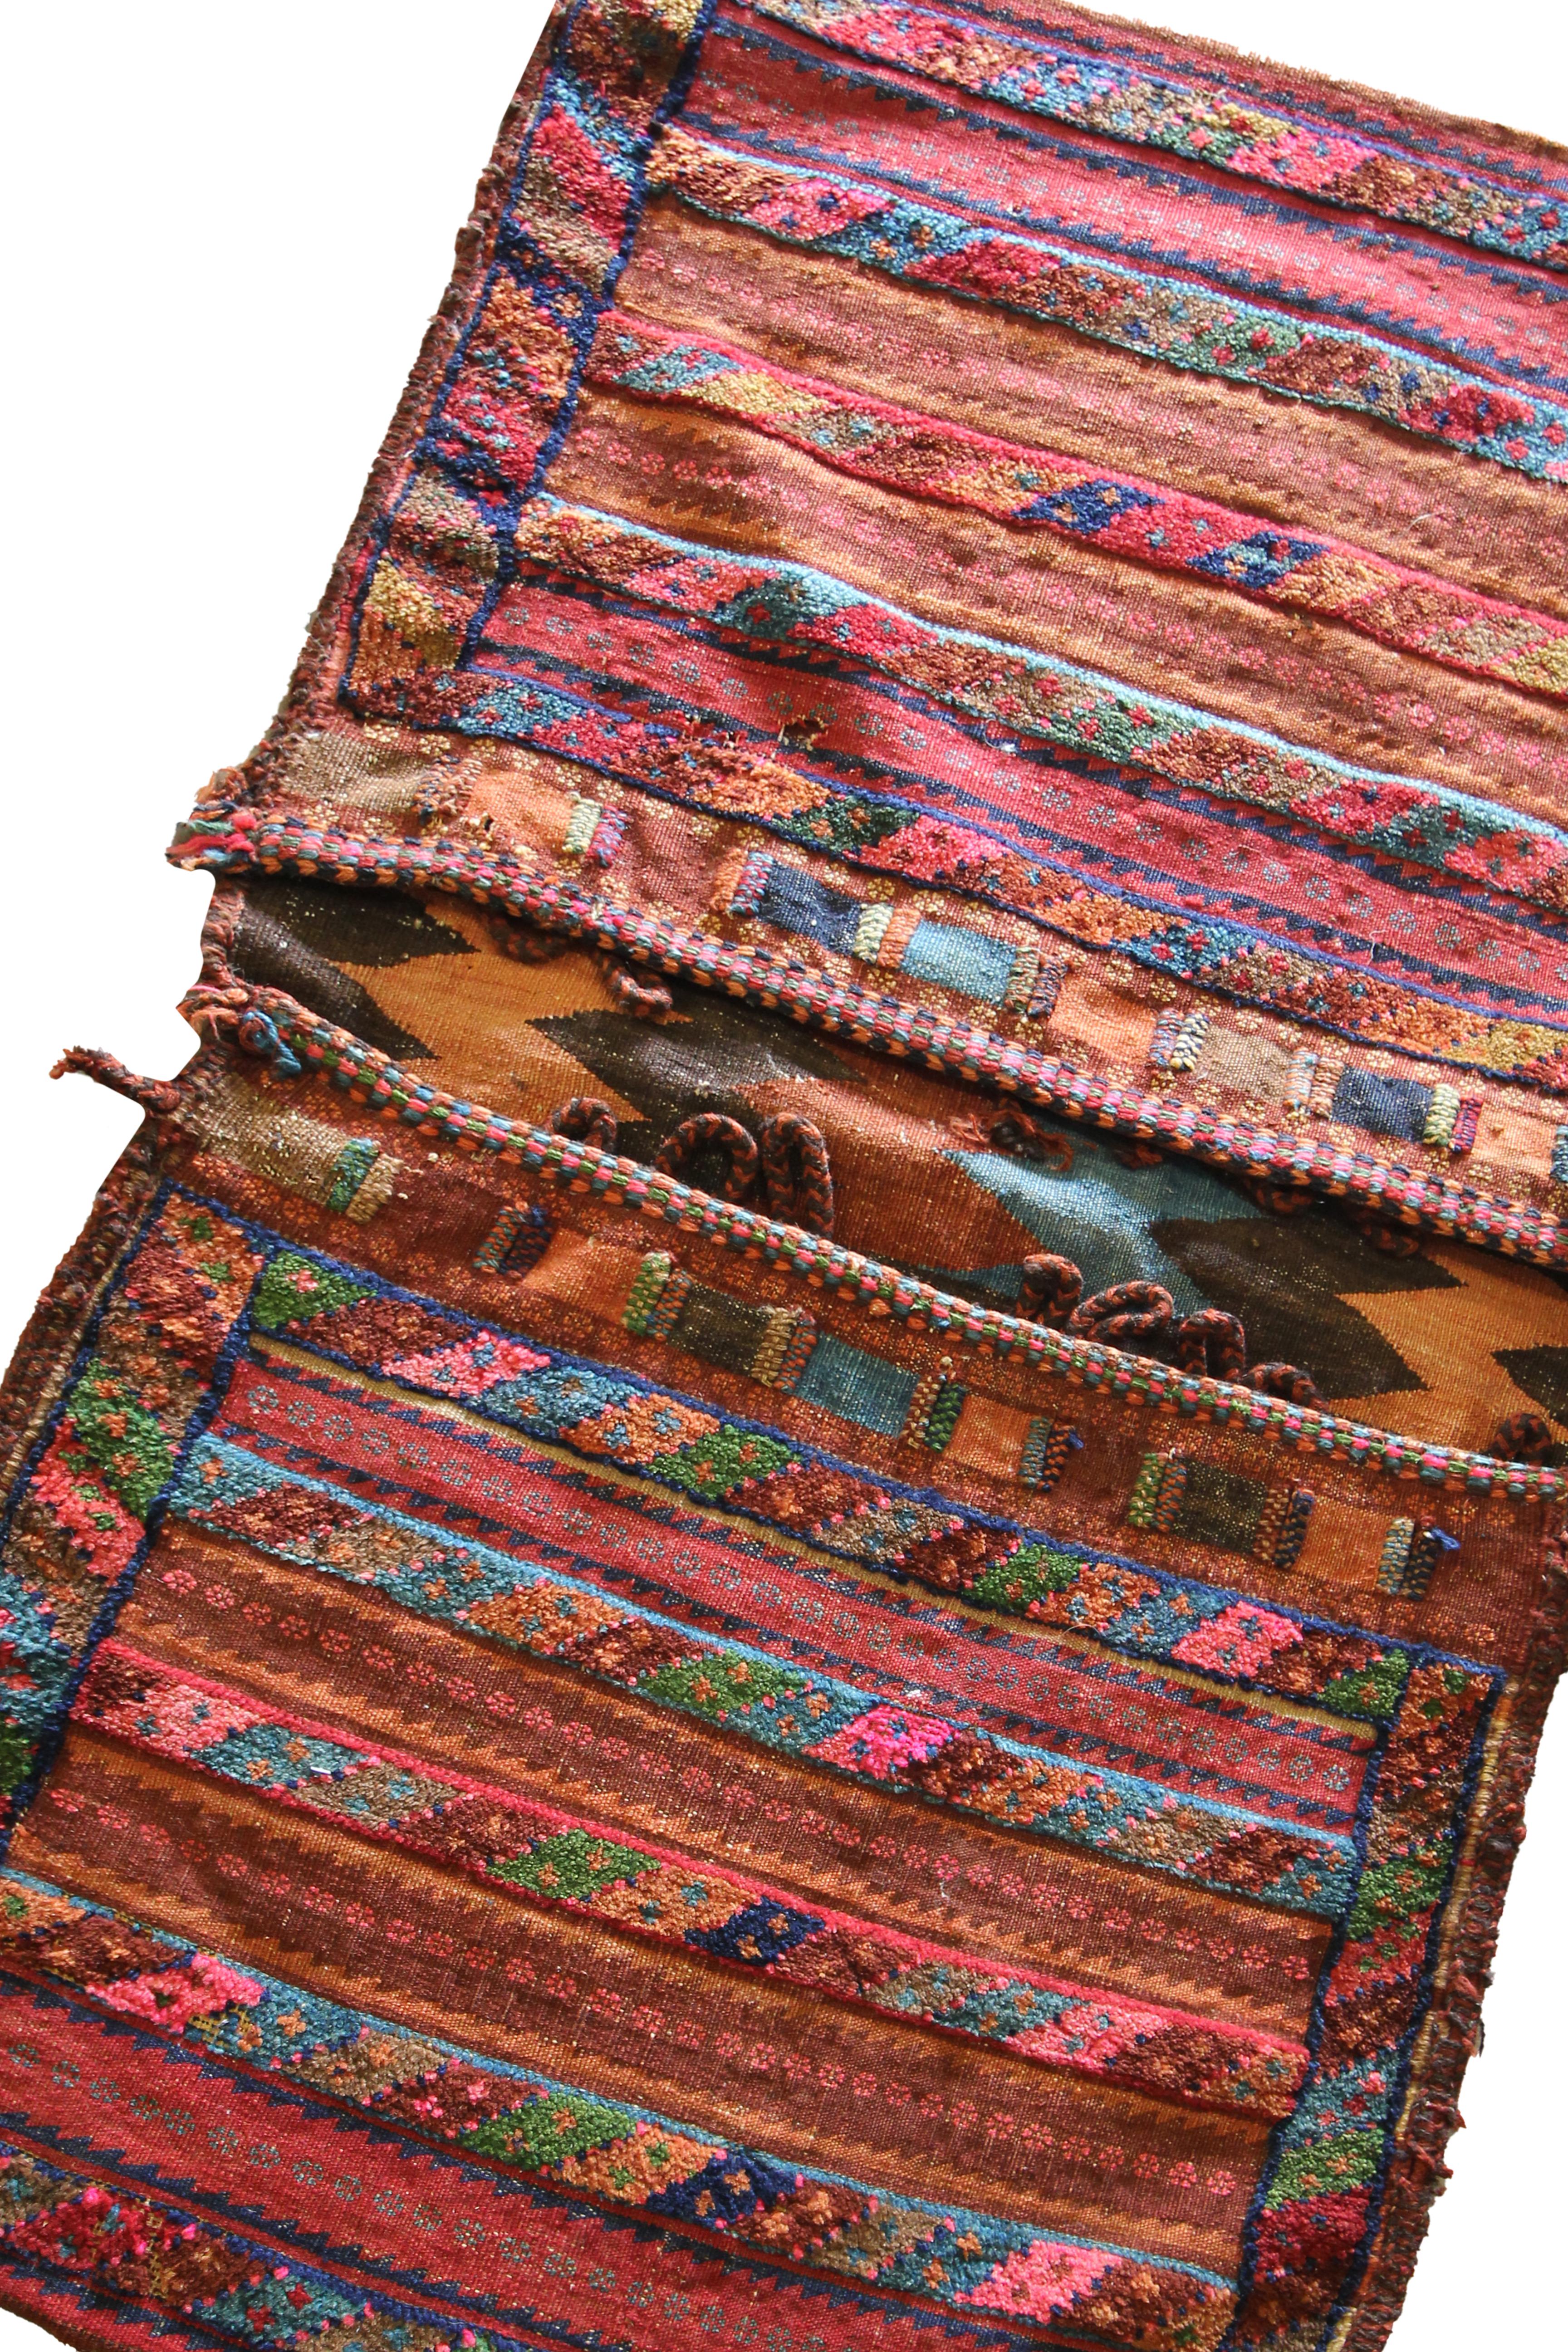 Azerbaijani Traditional Tribal Rug Textile Handwoven Antique Oriental Wool Saddle Bag For Sale